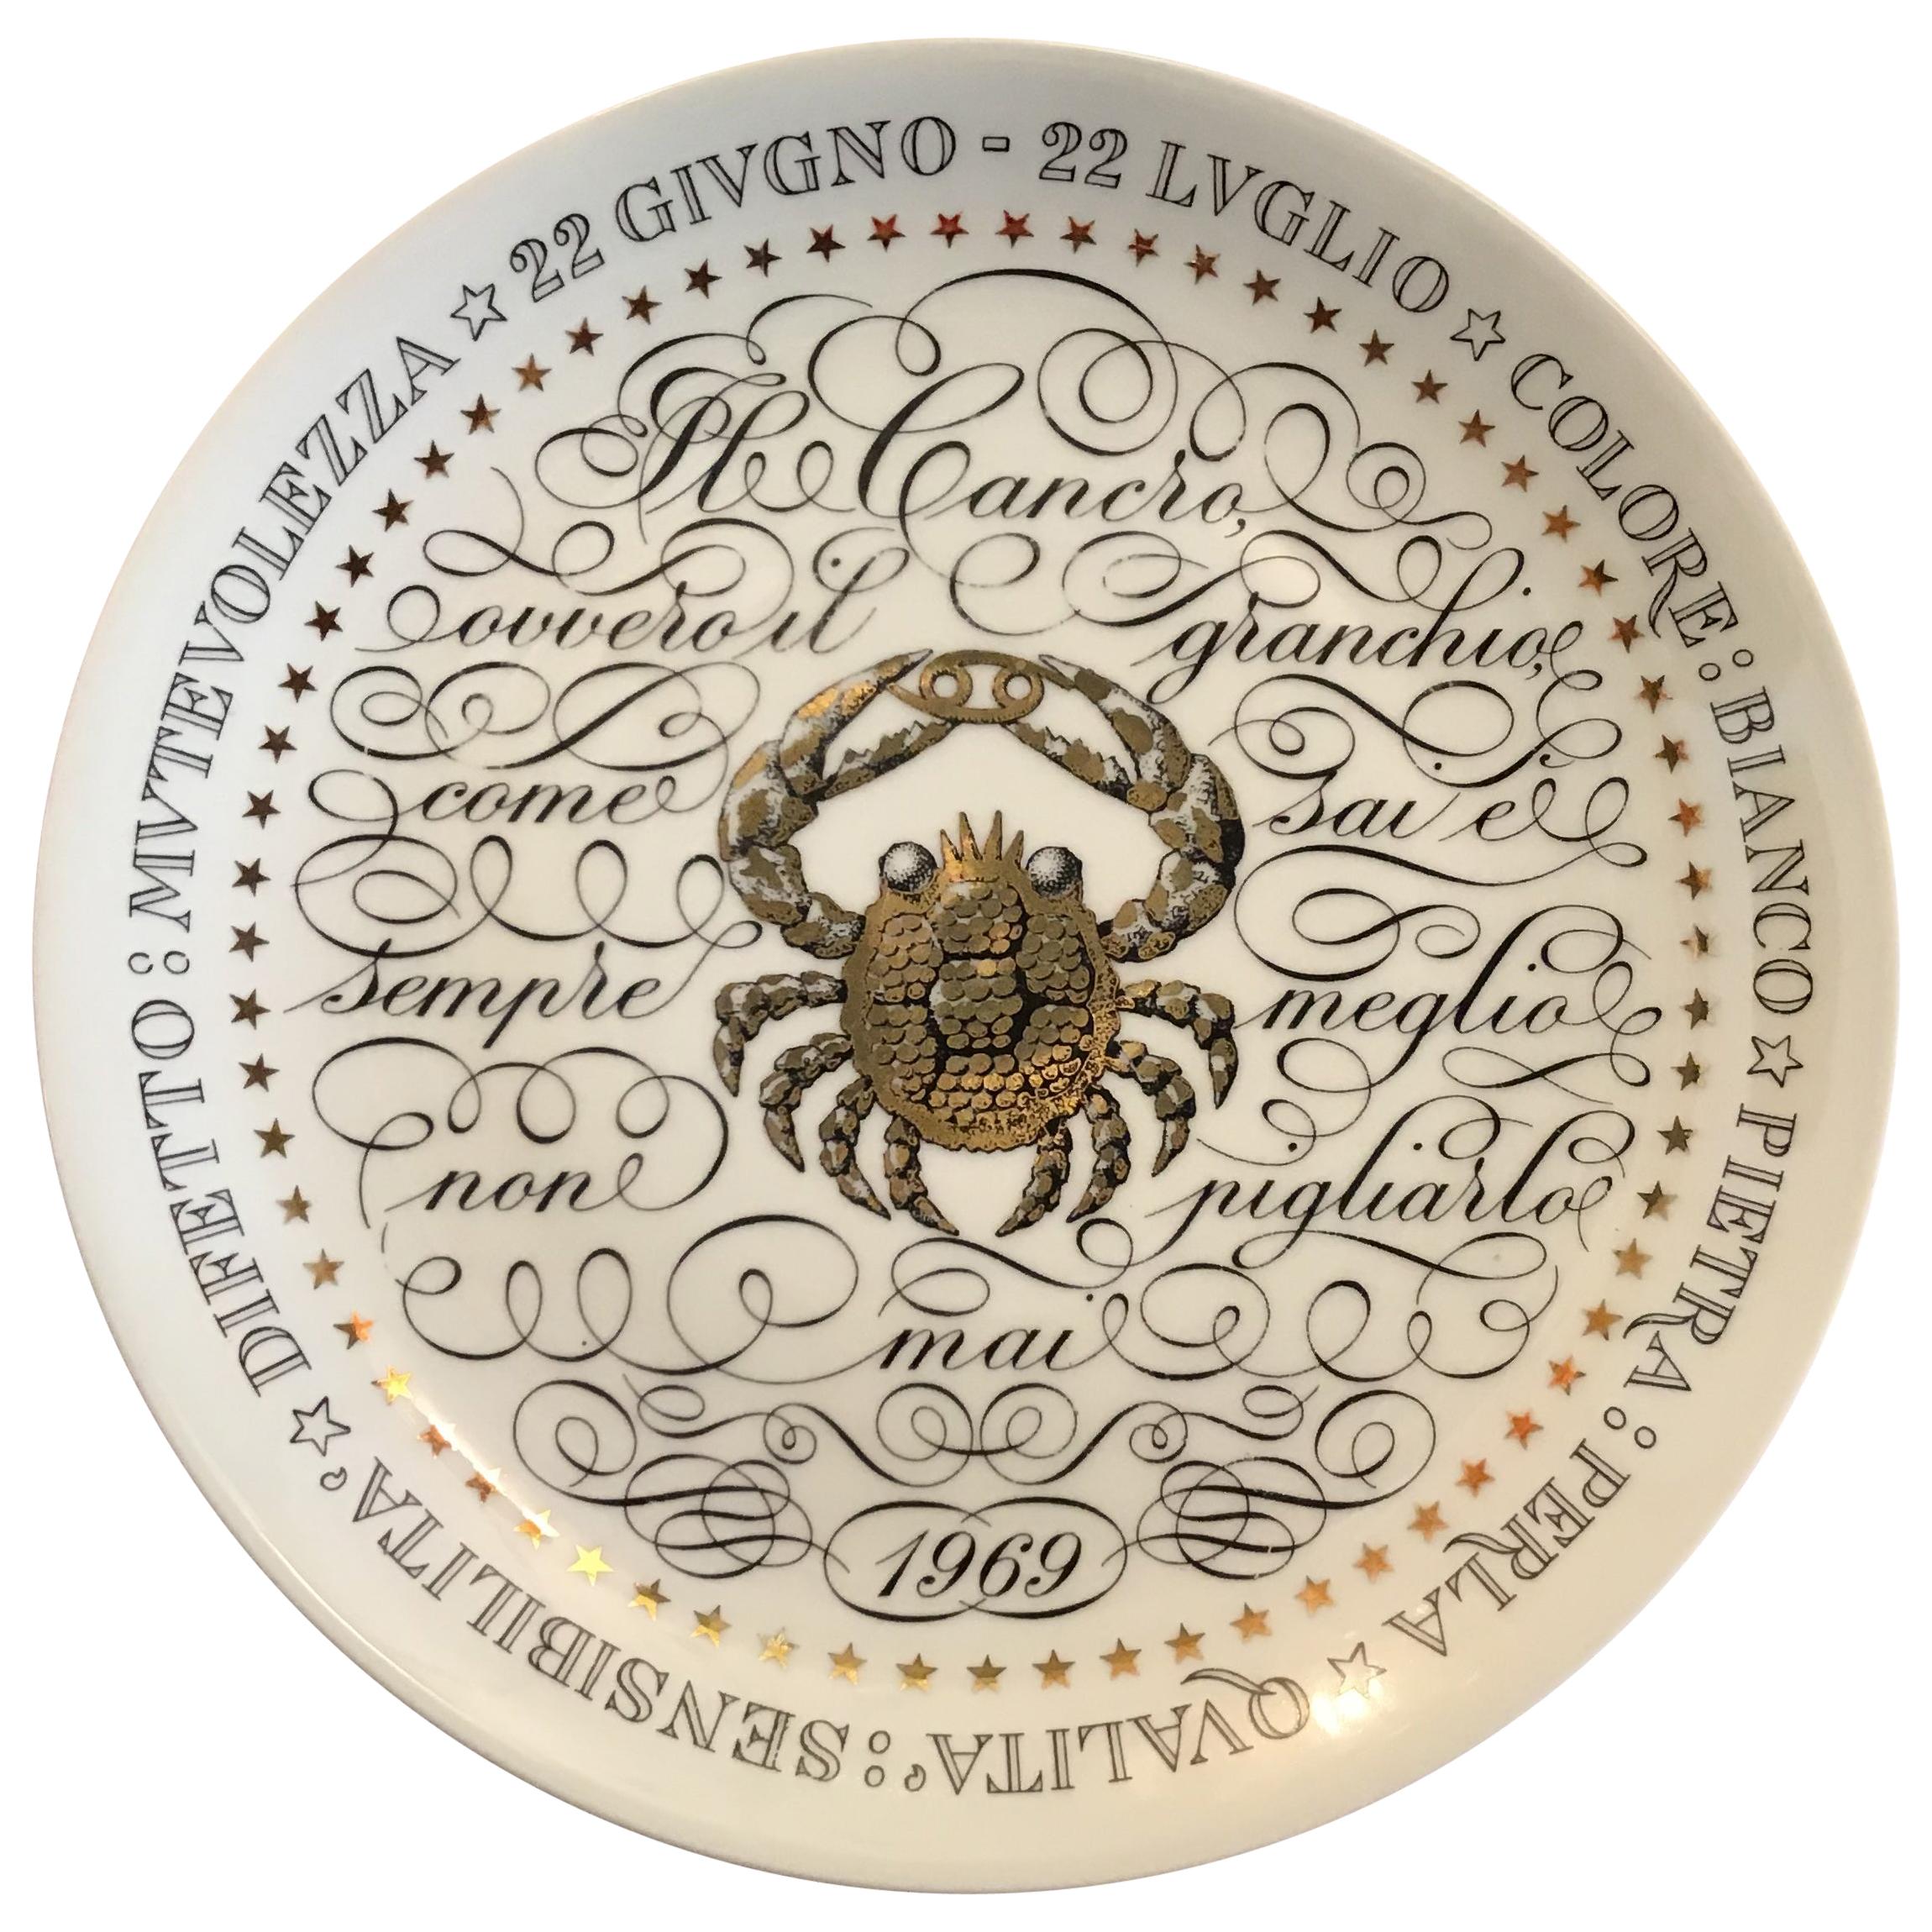 Piero Fornasetti Plate Zodiac Sign Cancer Porcelain 1969, Italy